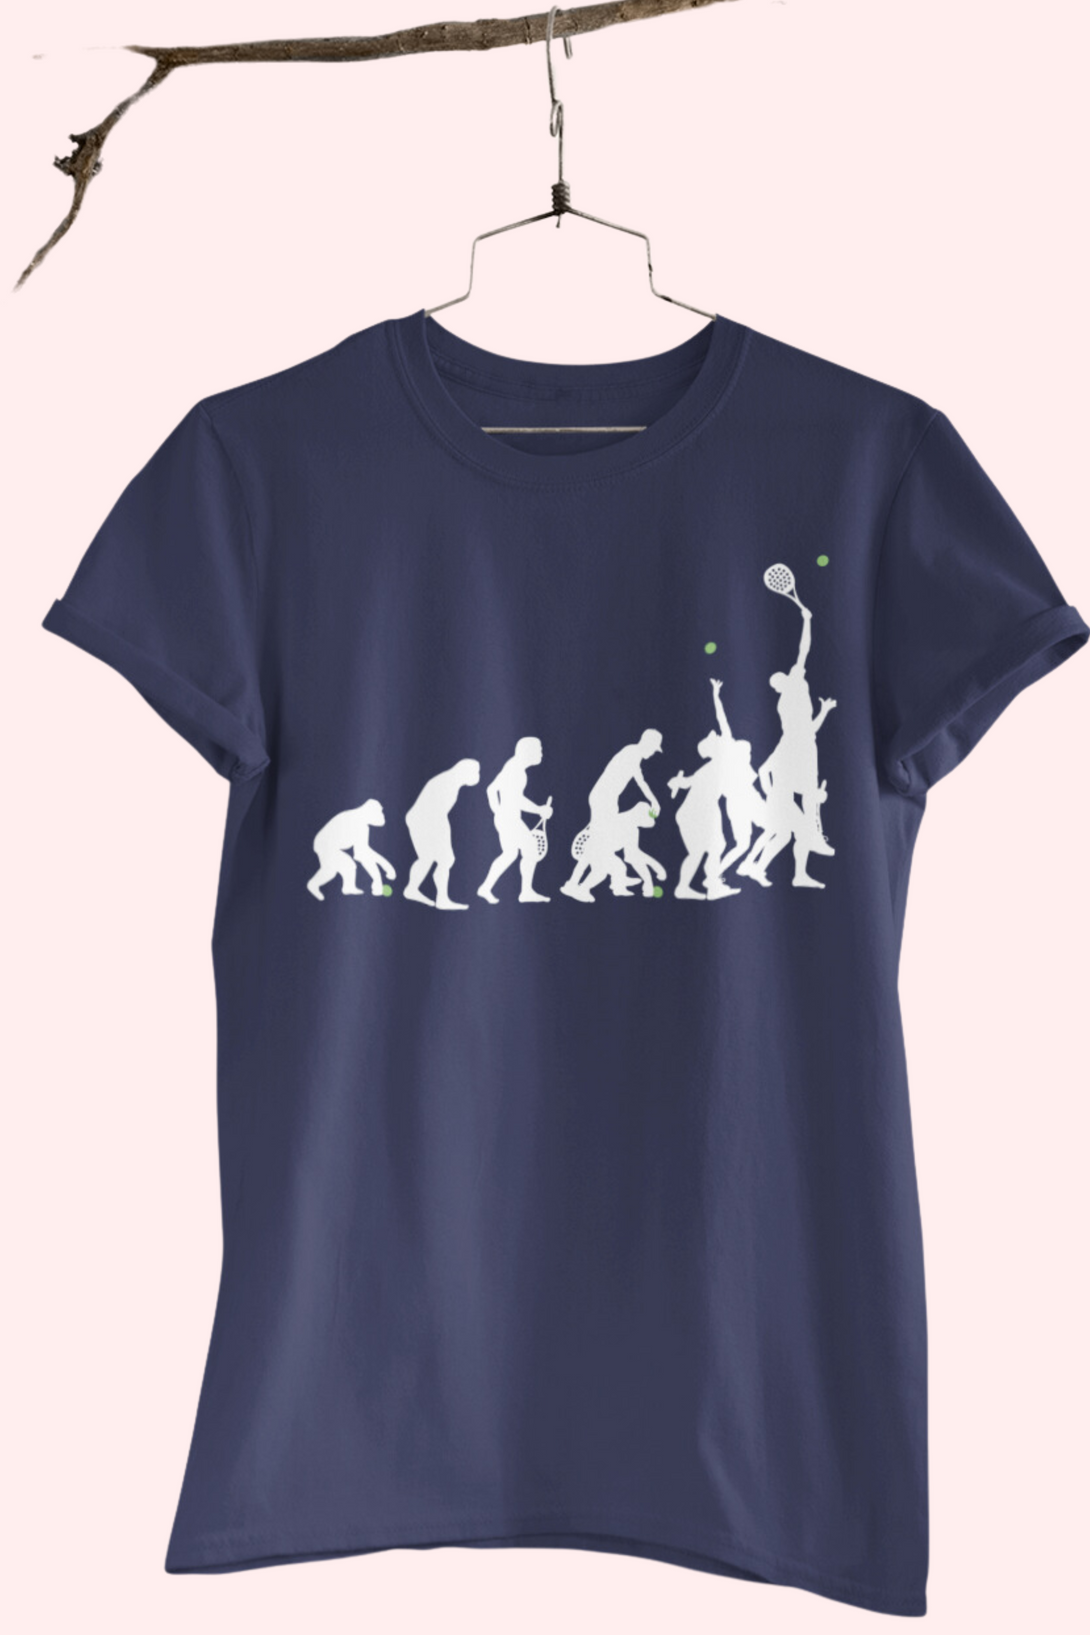 Tennis Evolution Printed T-Shirt For Men - WowWaves - 6